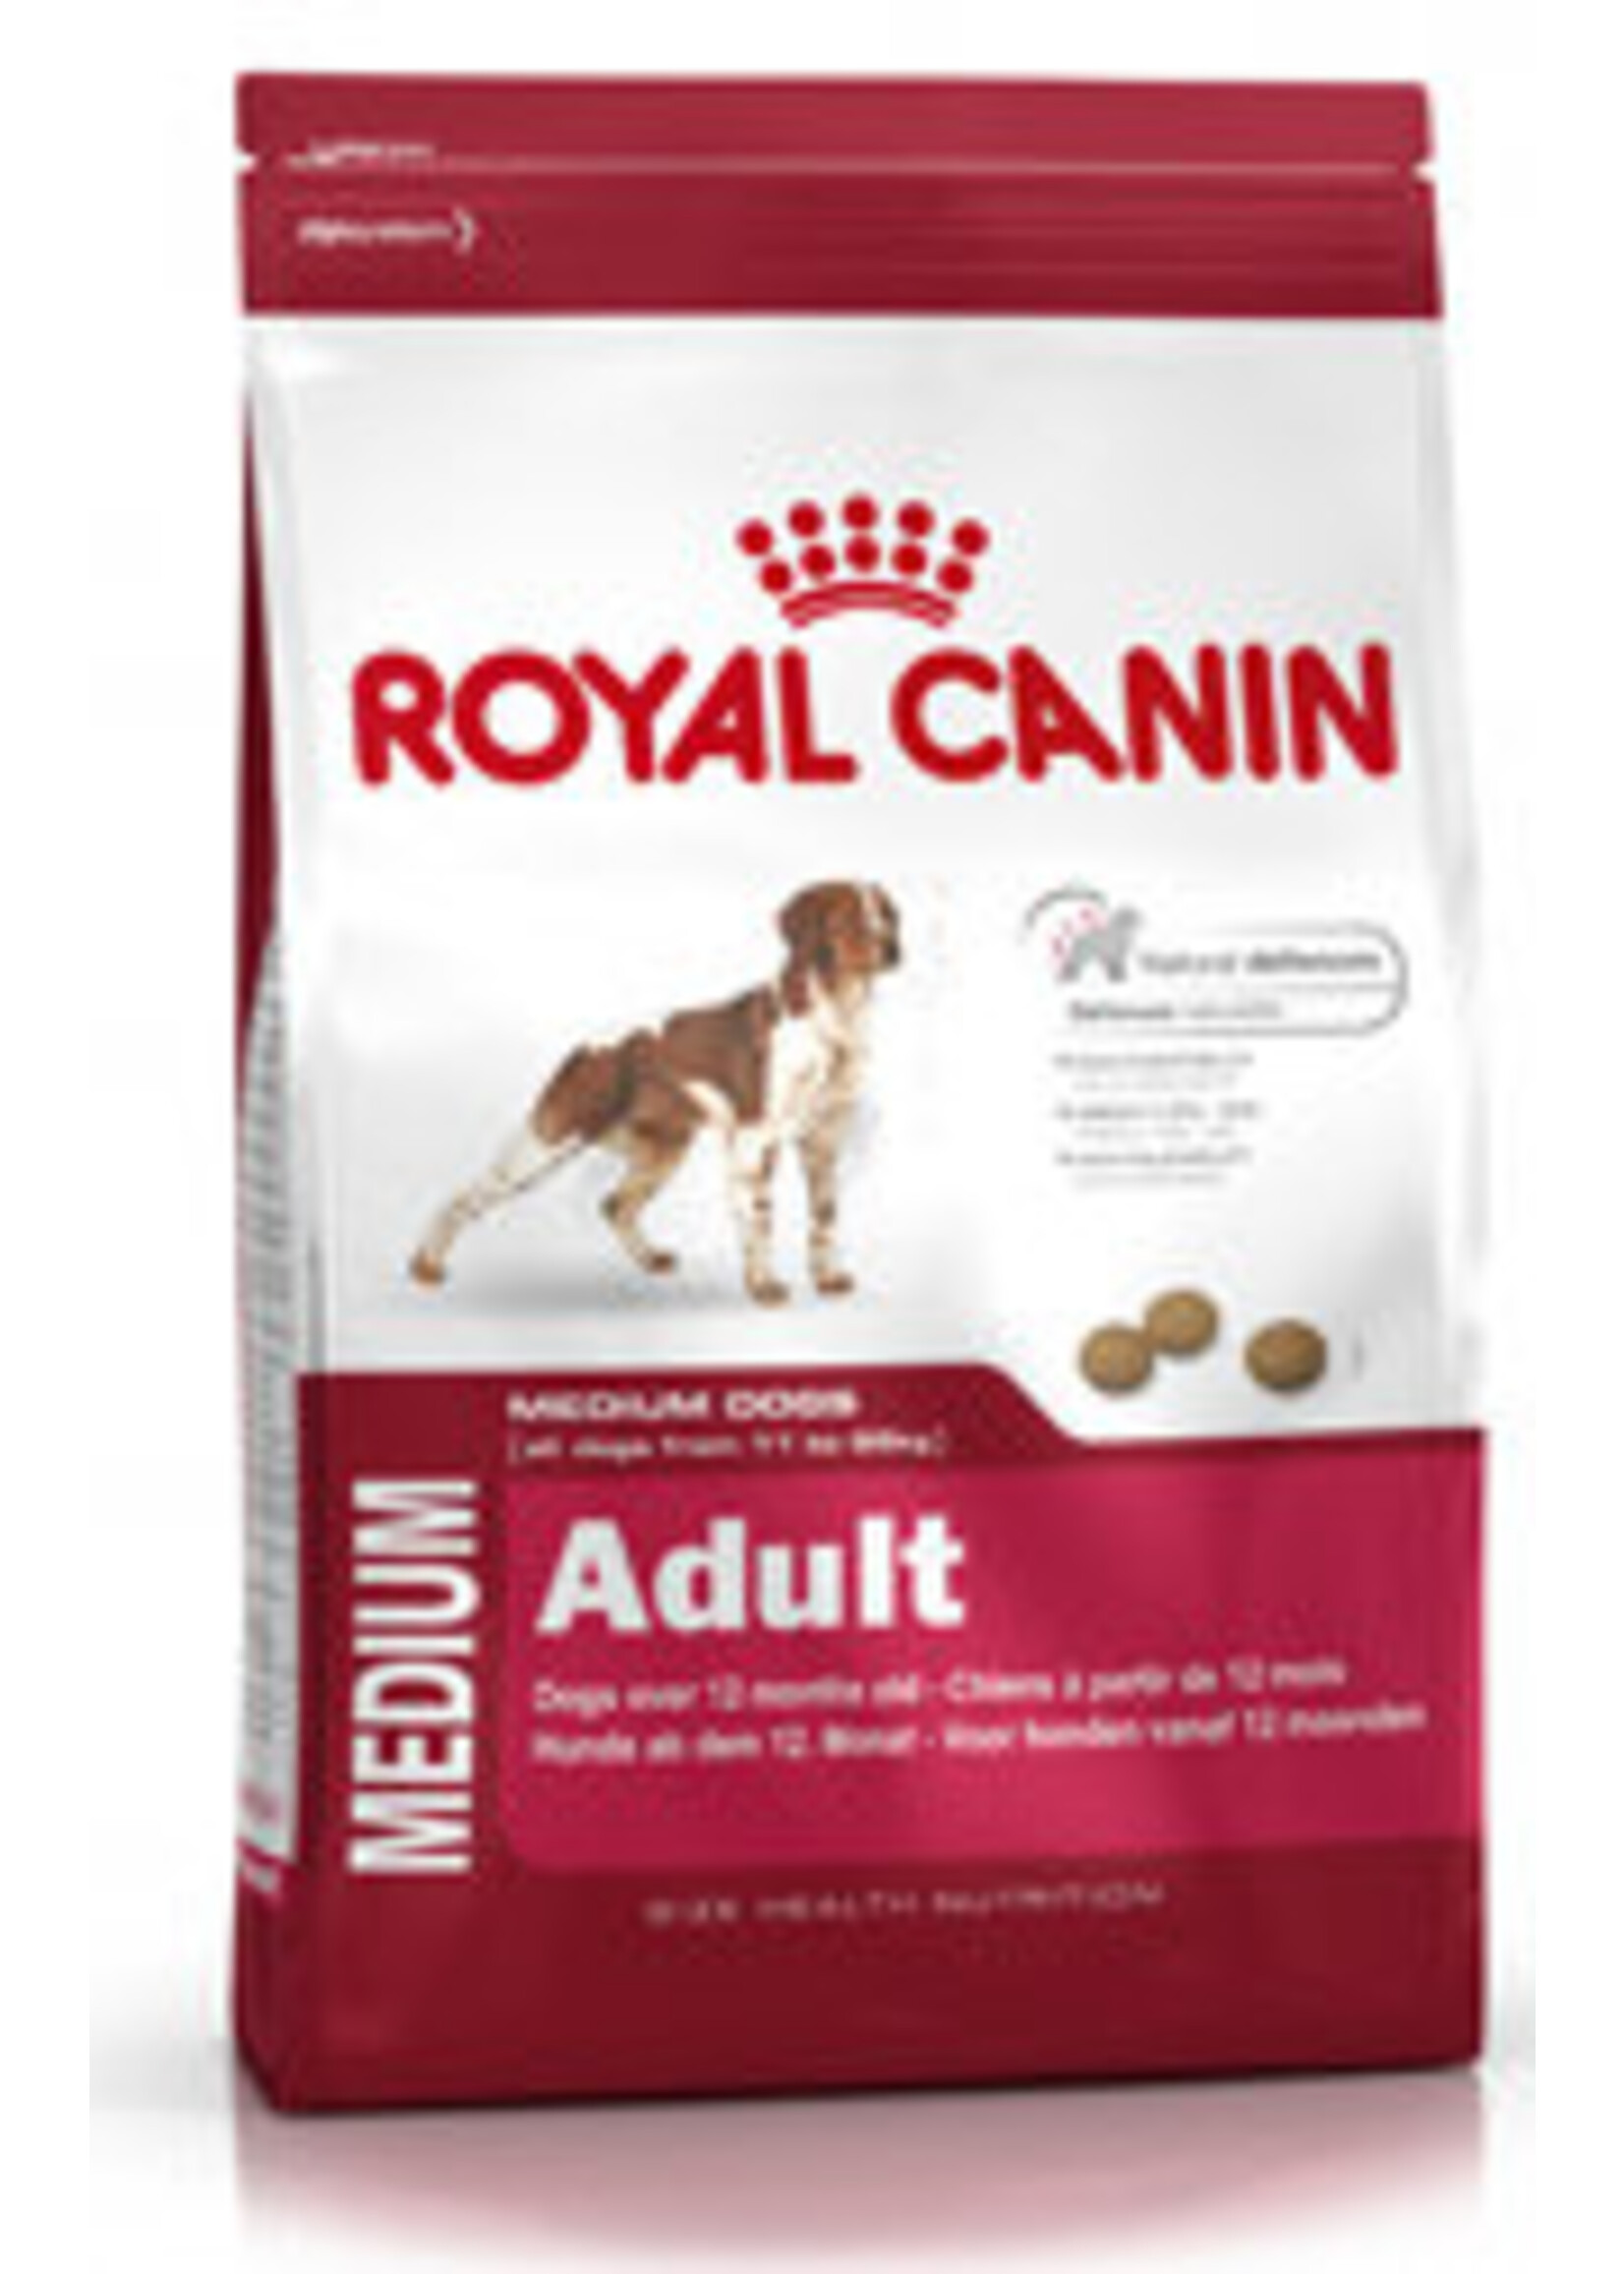 Royal Canin Royal Canin Shn Medium Adult Canine 10kg